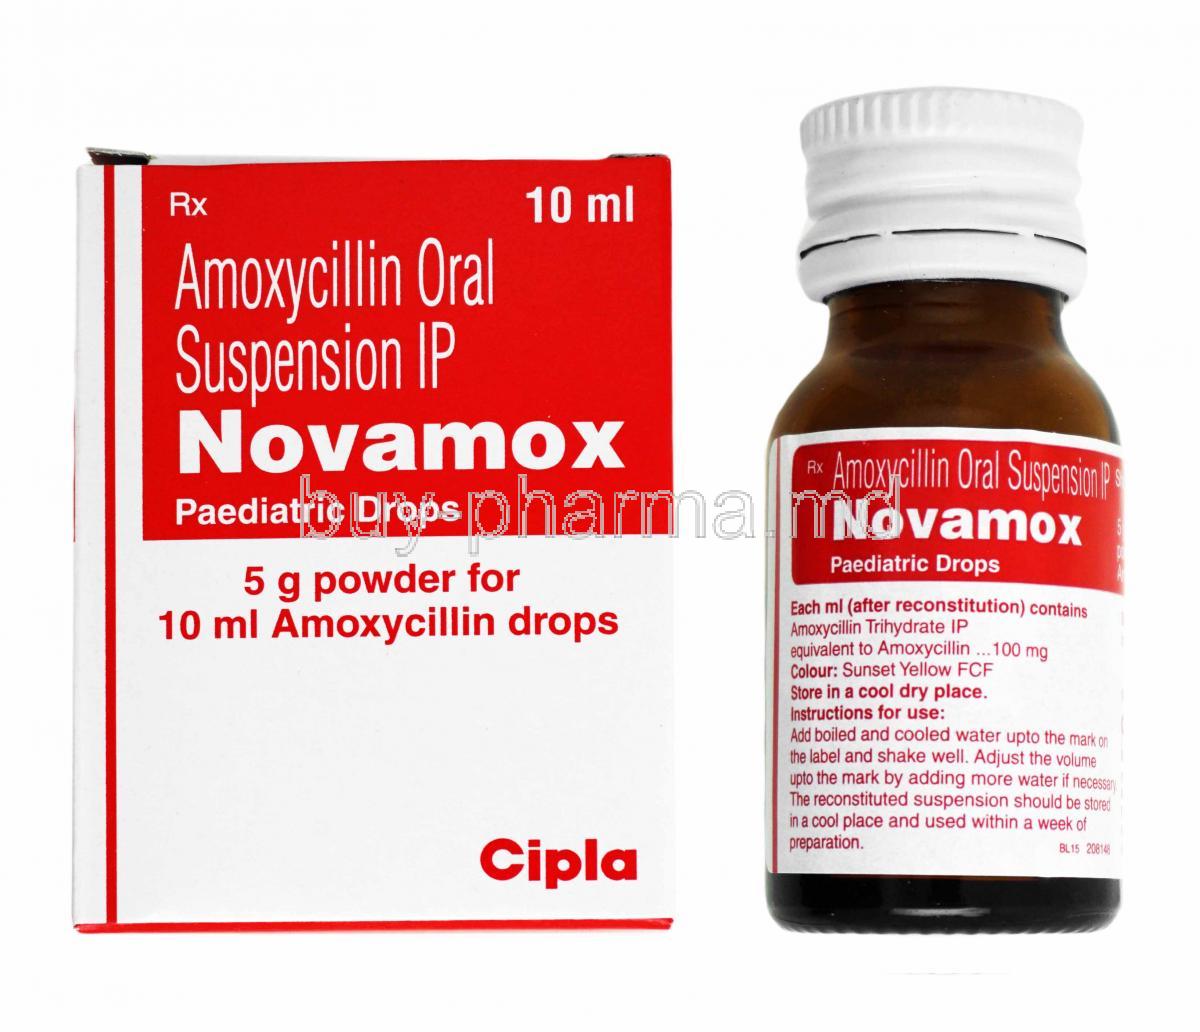 Novamox Paediatric Drops, Amoxycillin box and bottle